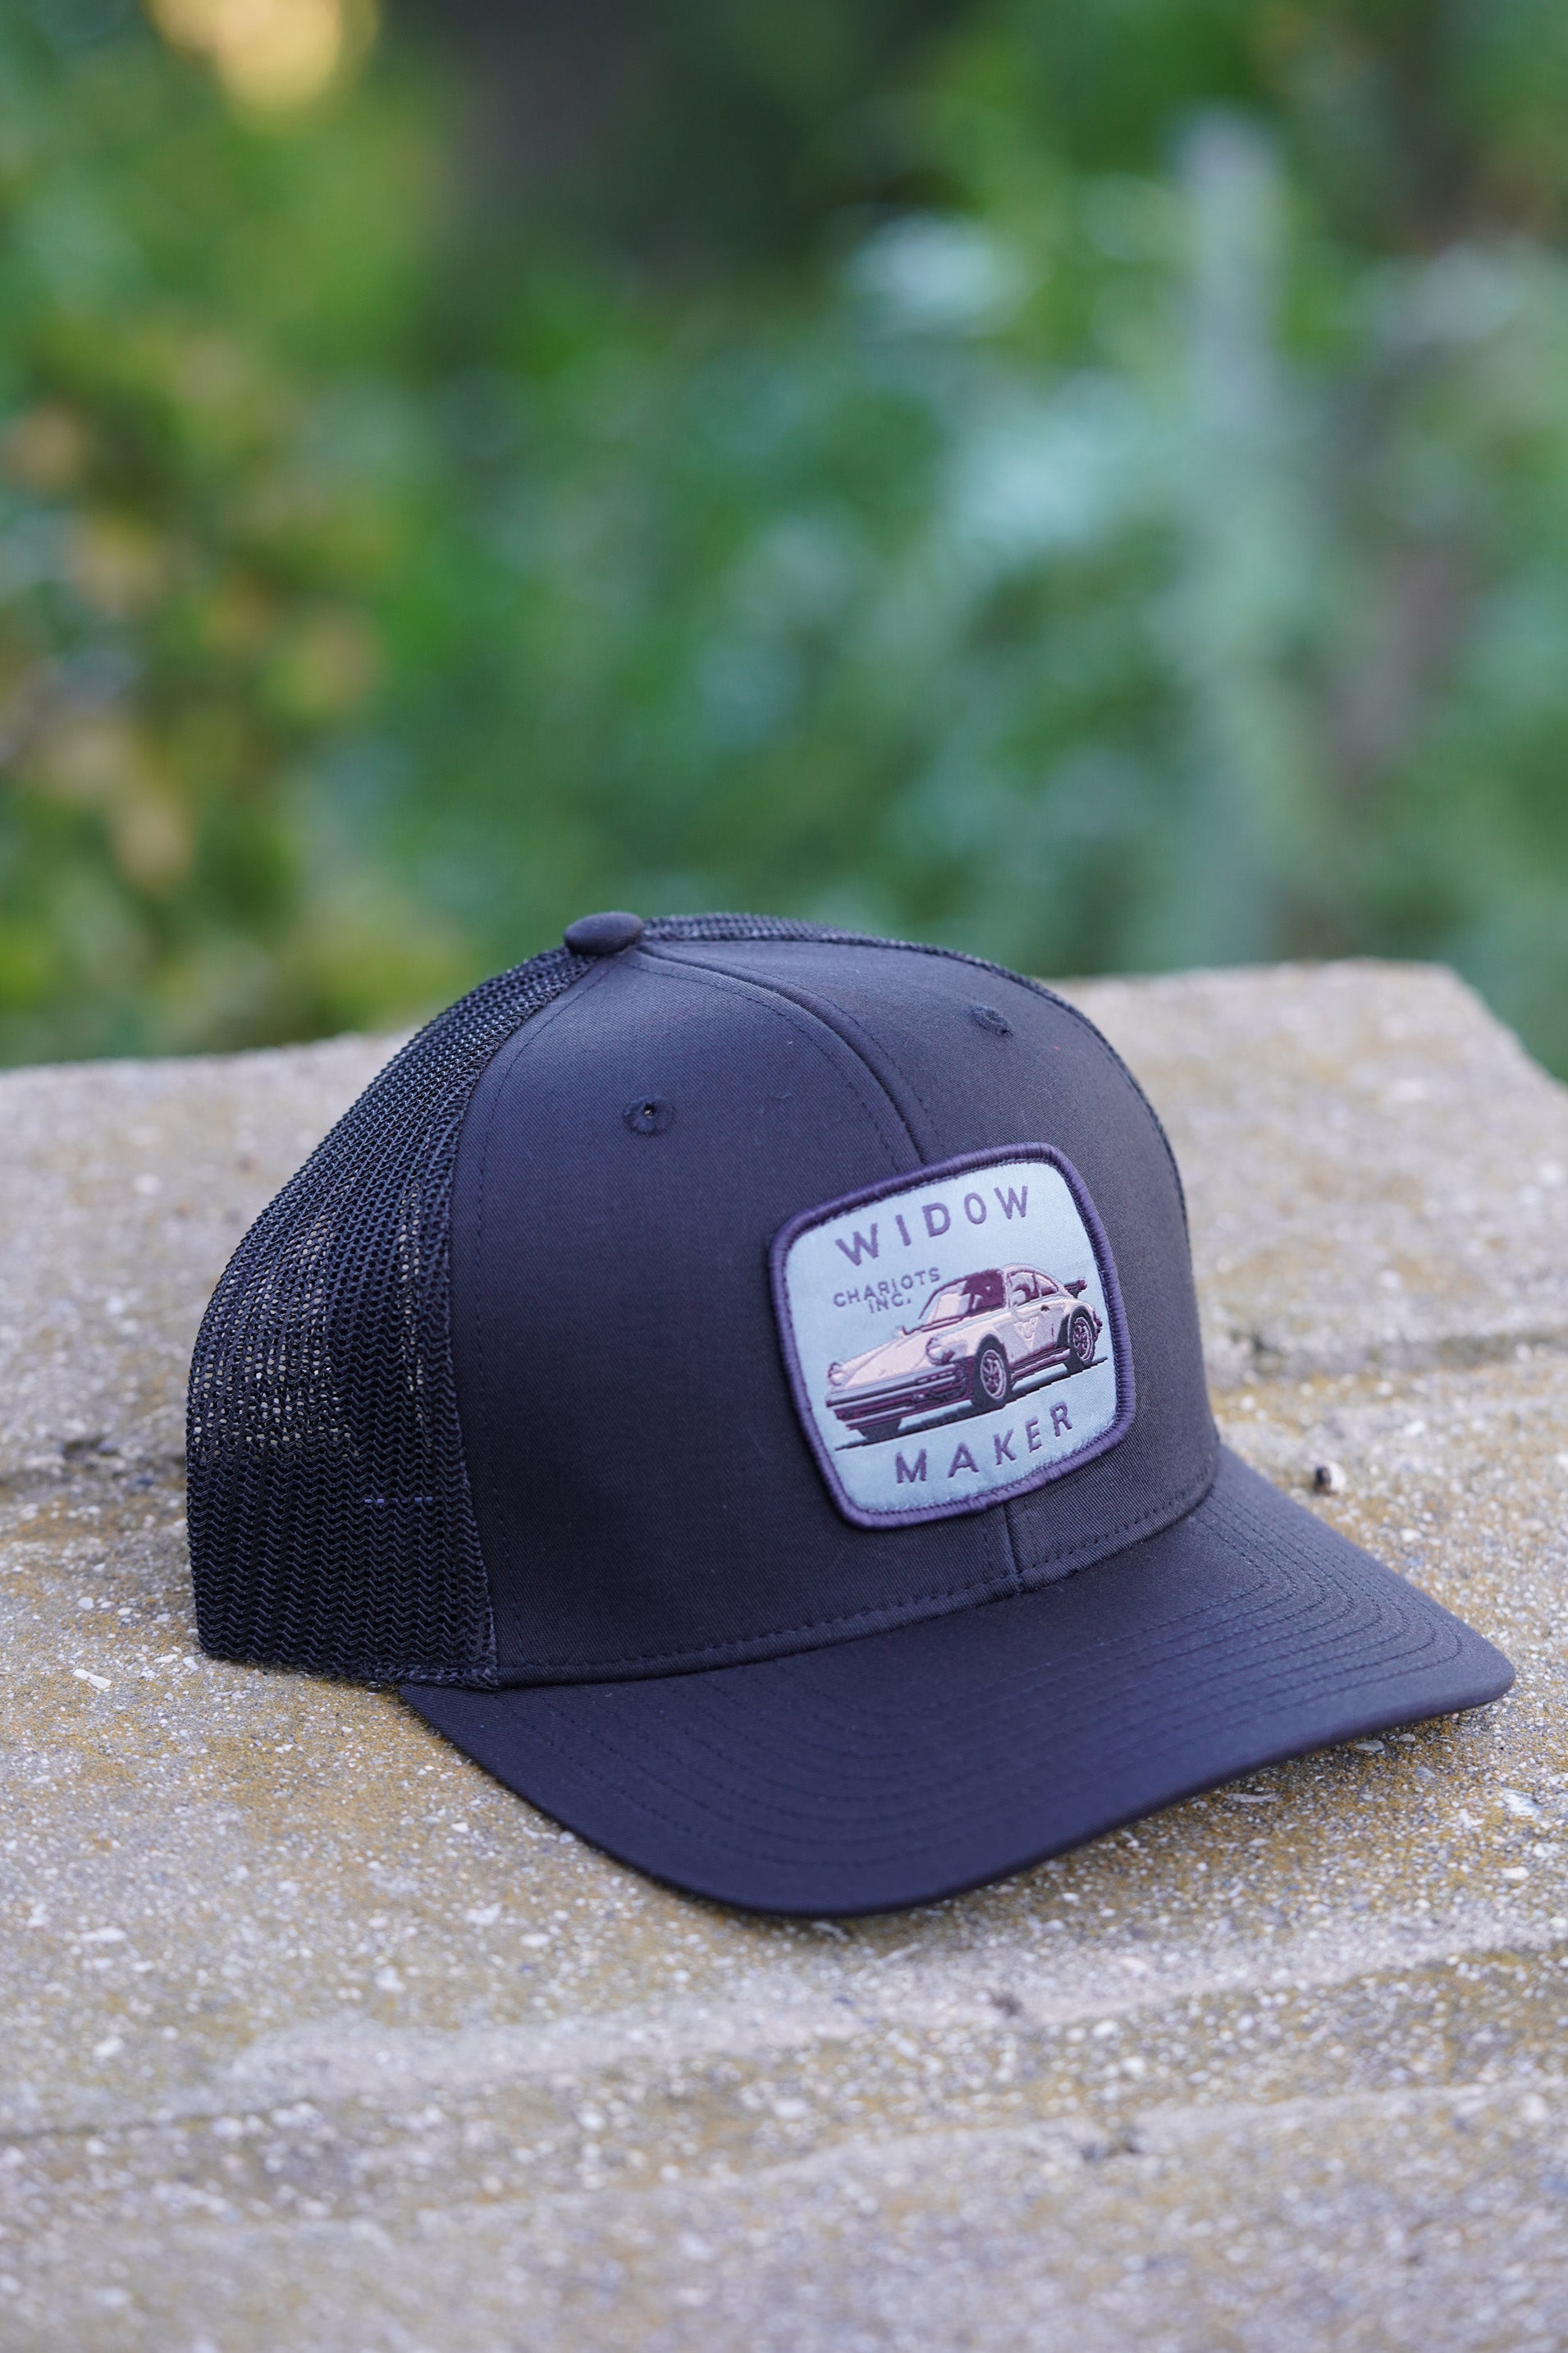 WIDOWMAKER V.2 BLUE (Black Premium Trucker Hat)